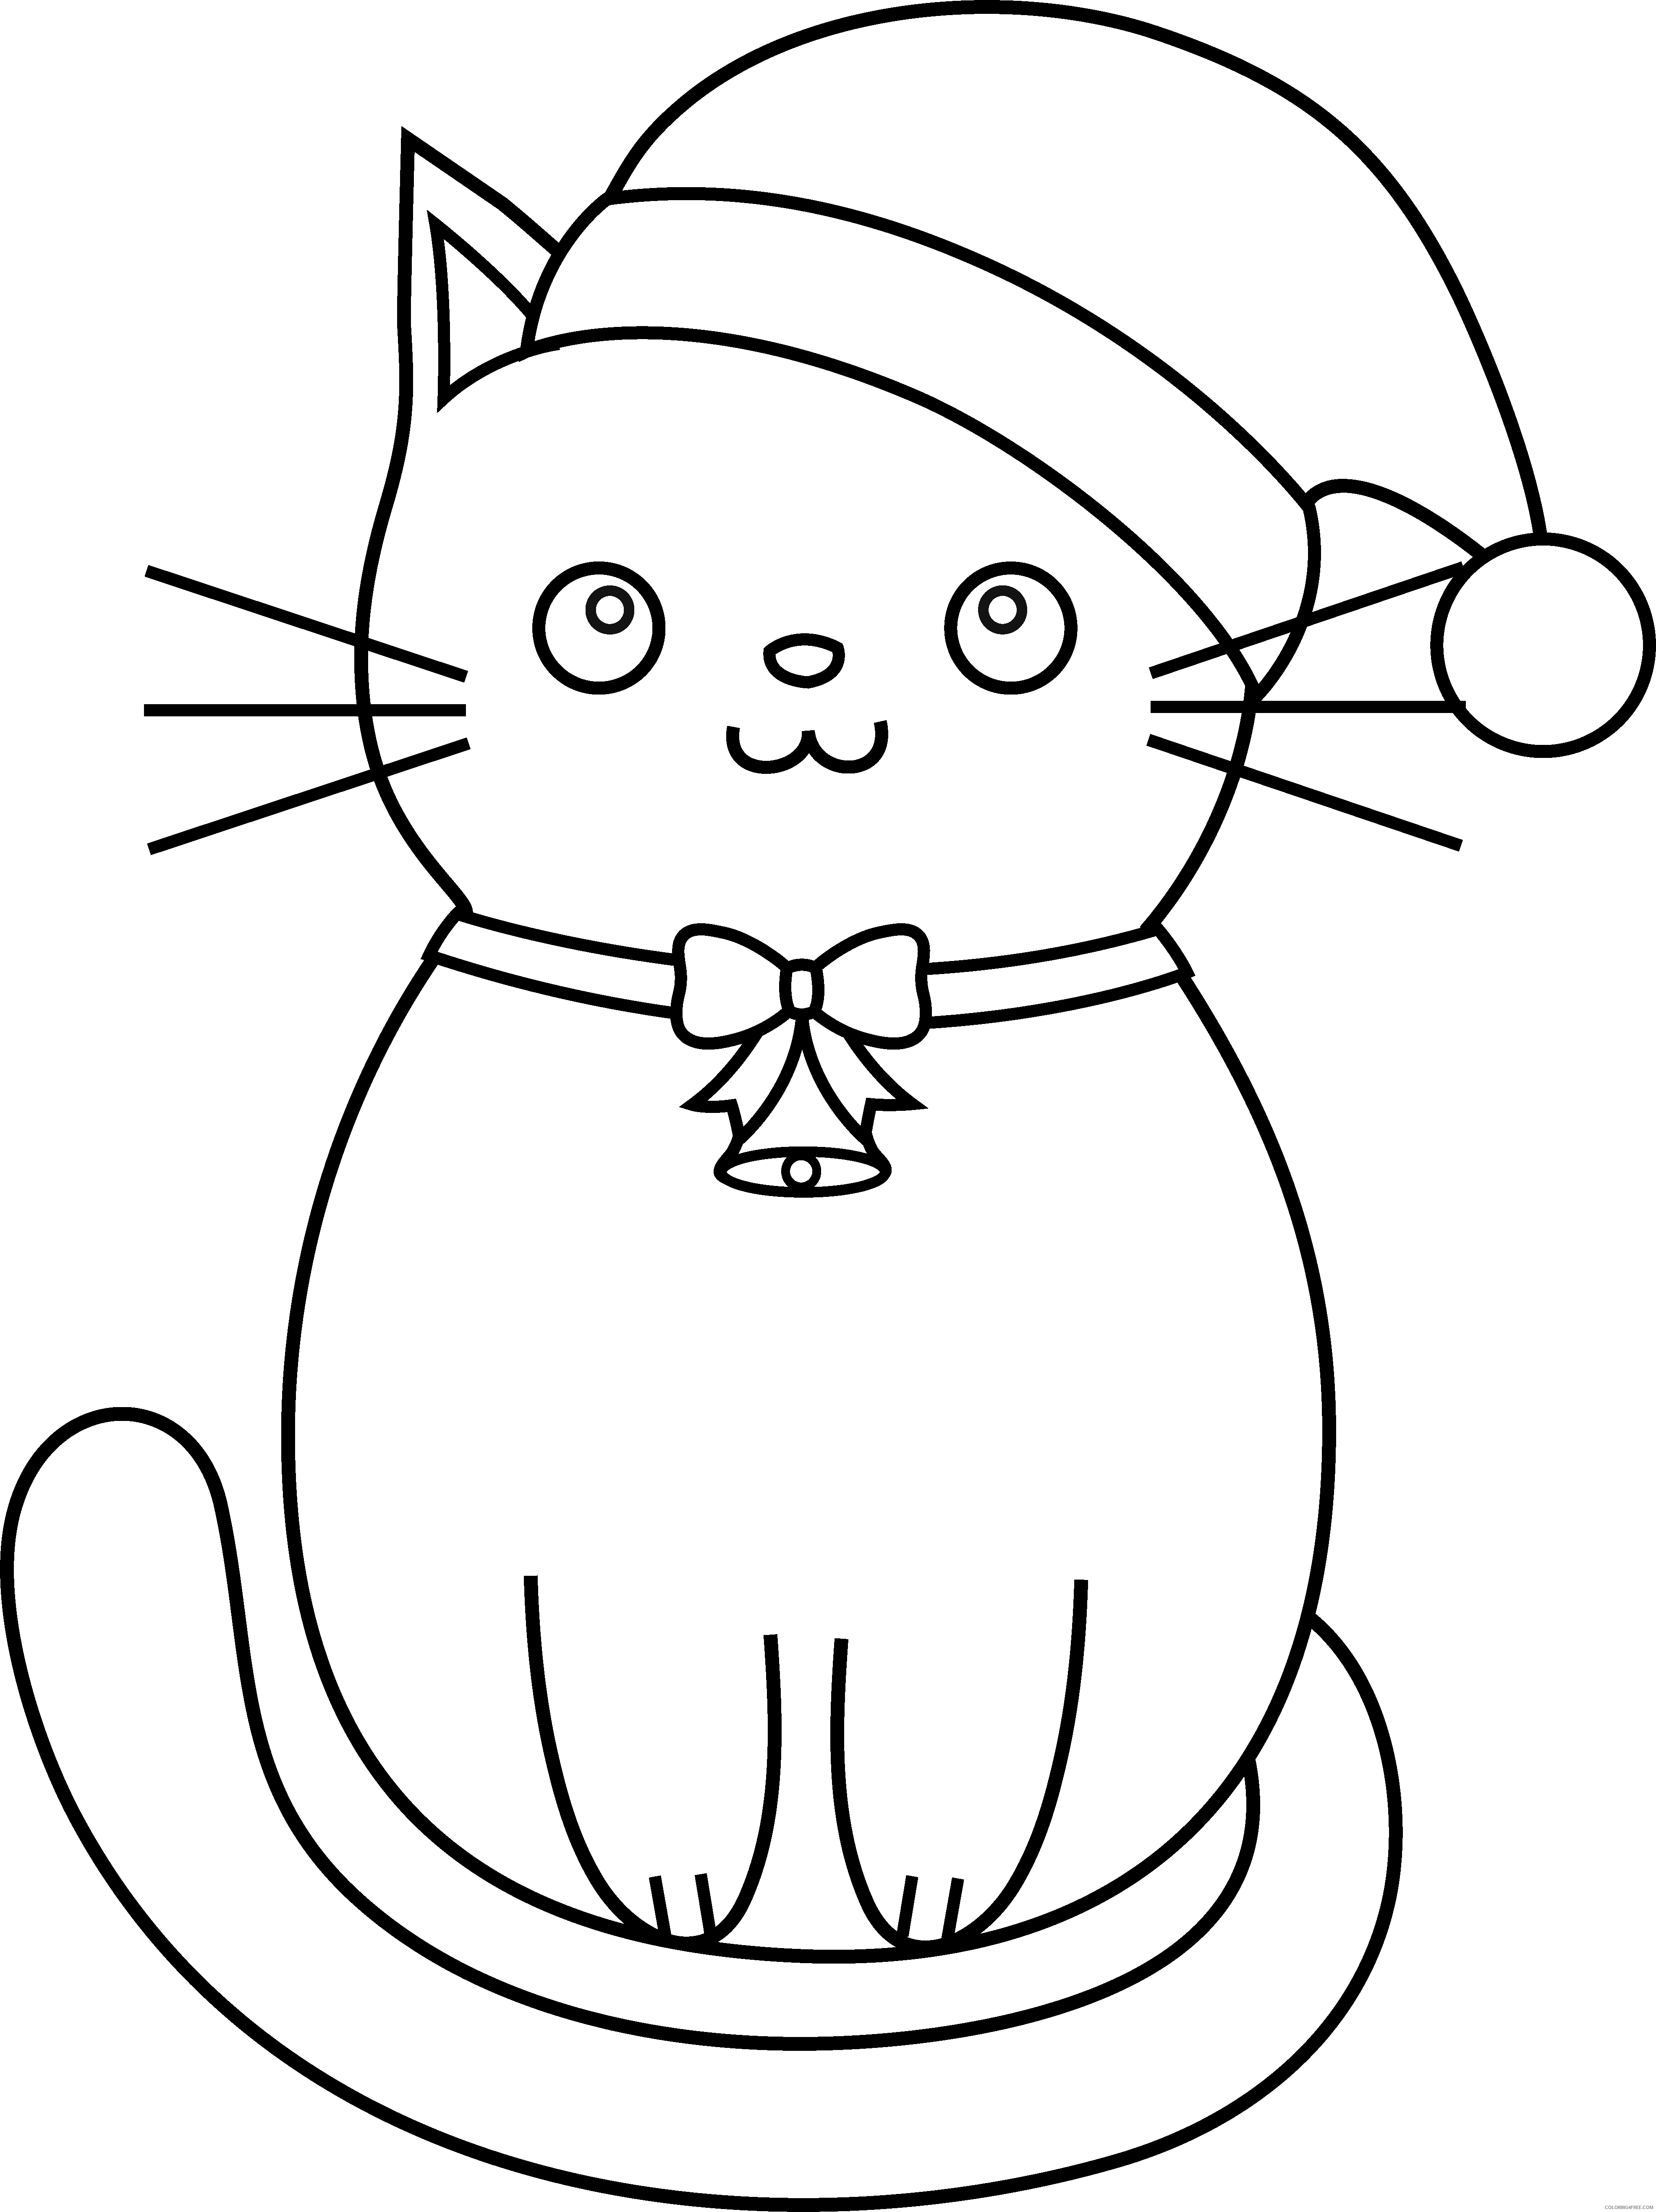 Kitten Coloring Pages Animal Printable Sheets Free Kitten 2021 2989 Coloring4free